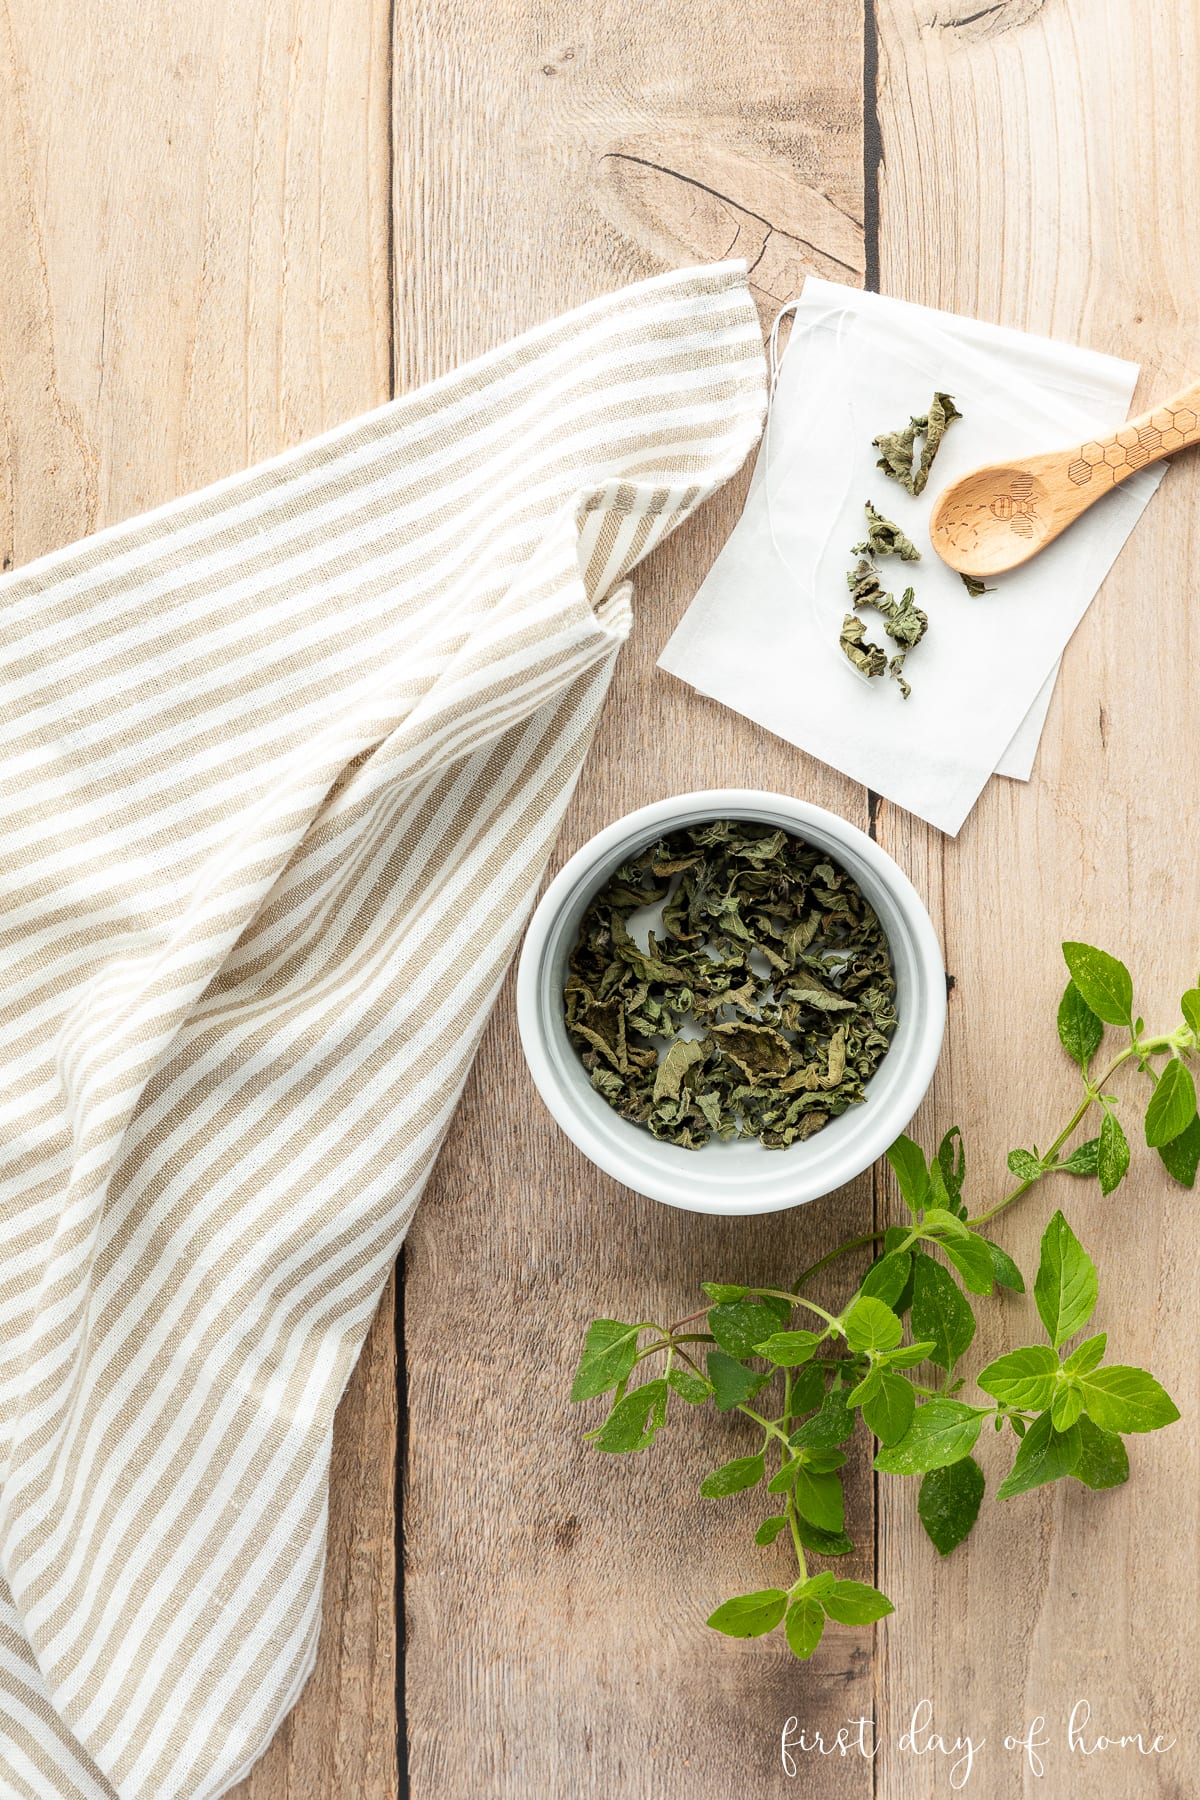 Dried herbal tea leaves shown with fresh herbs, tea bags, wooden spoon, and tea towel